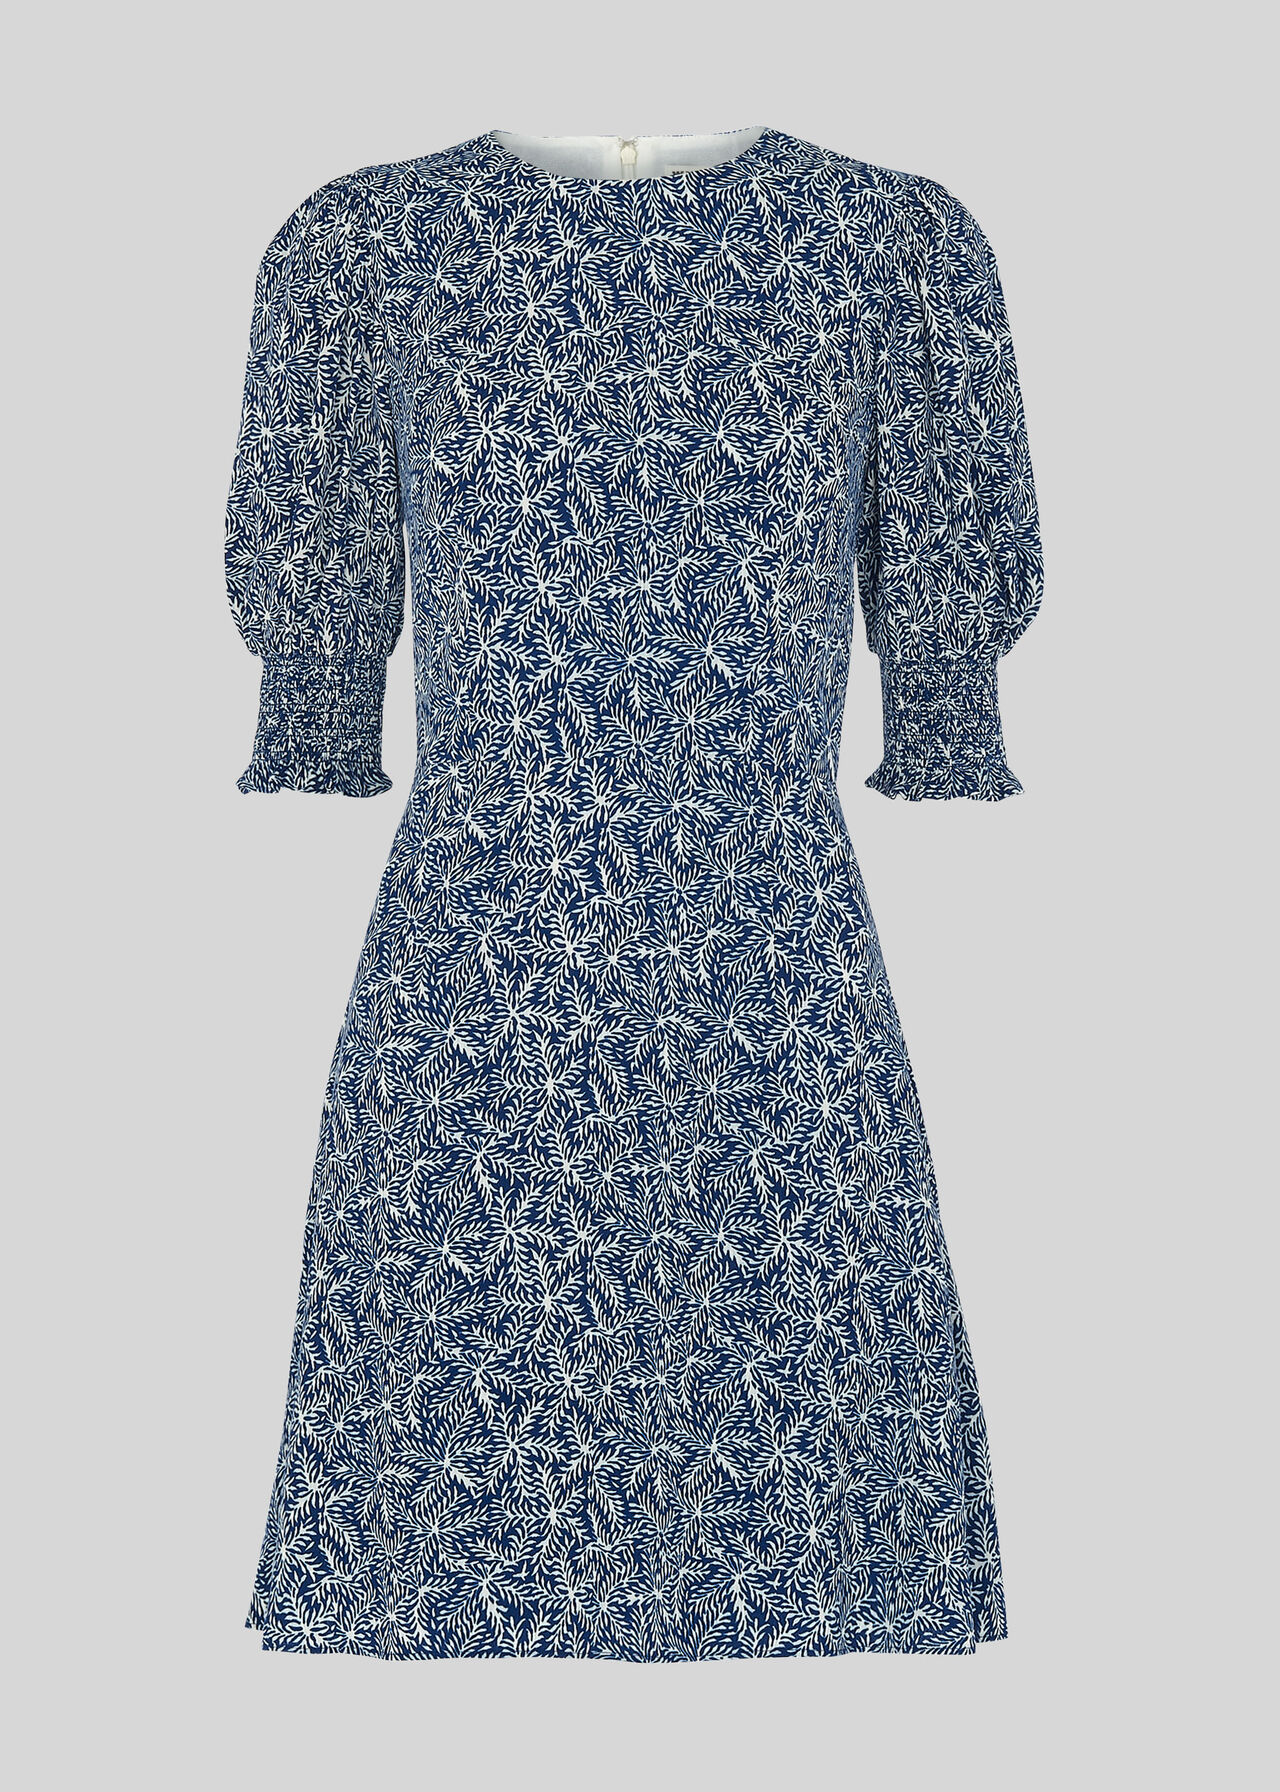 Josefina Etched Print Dress Navy/Multi